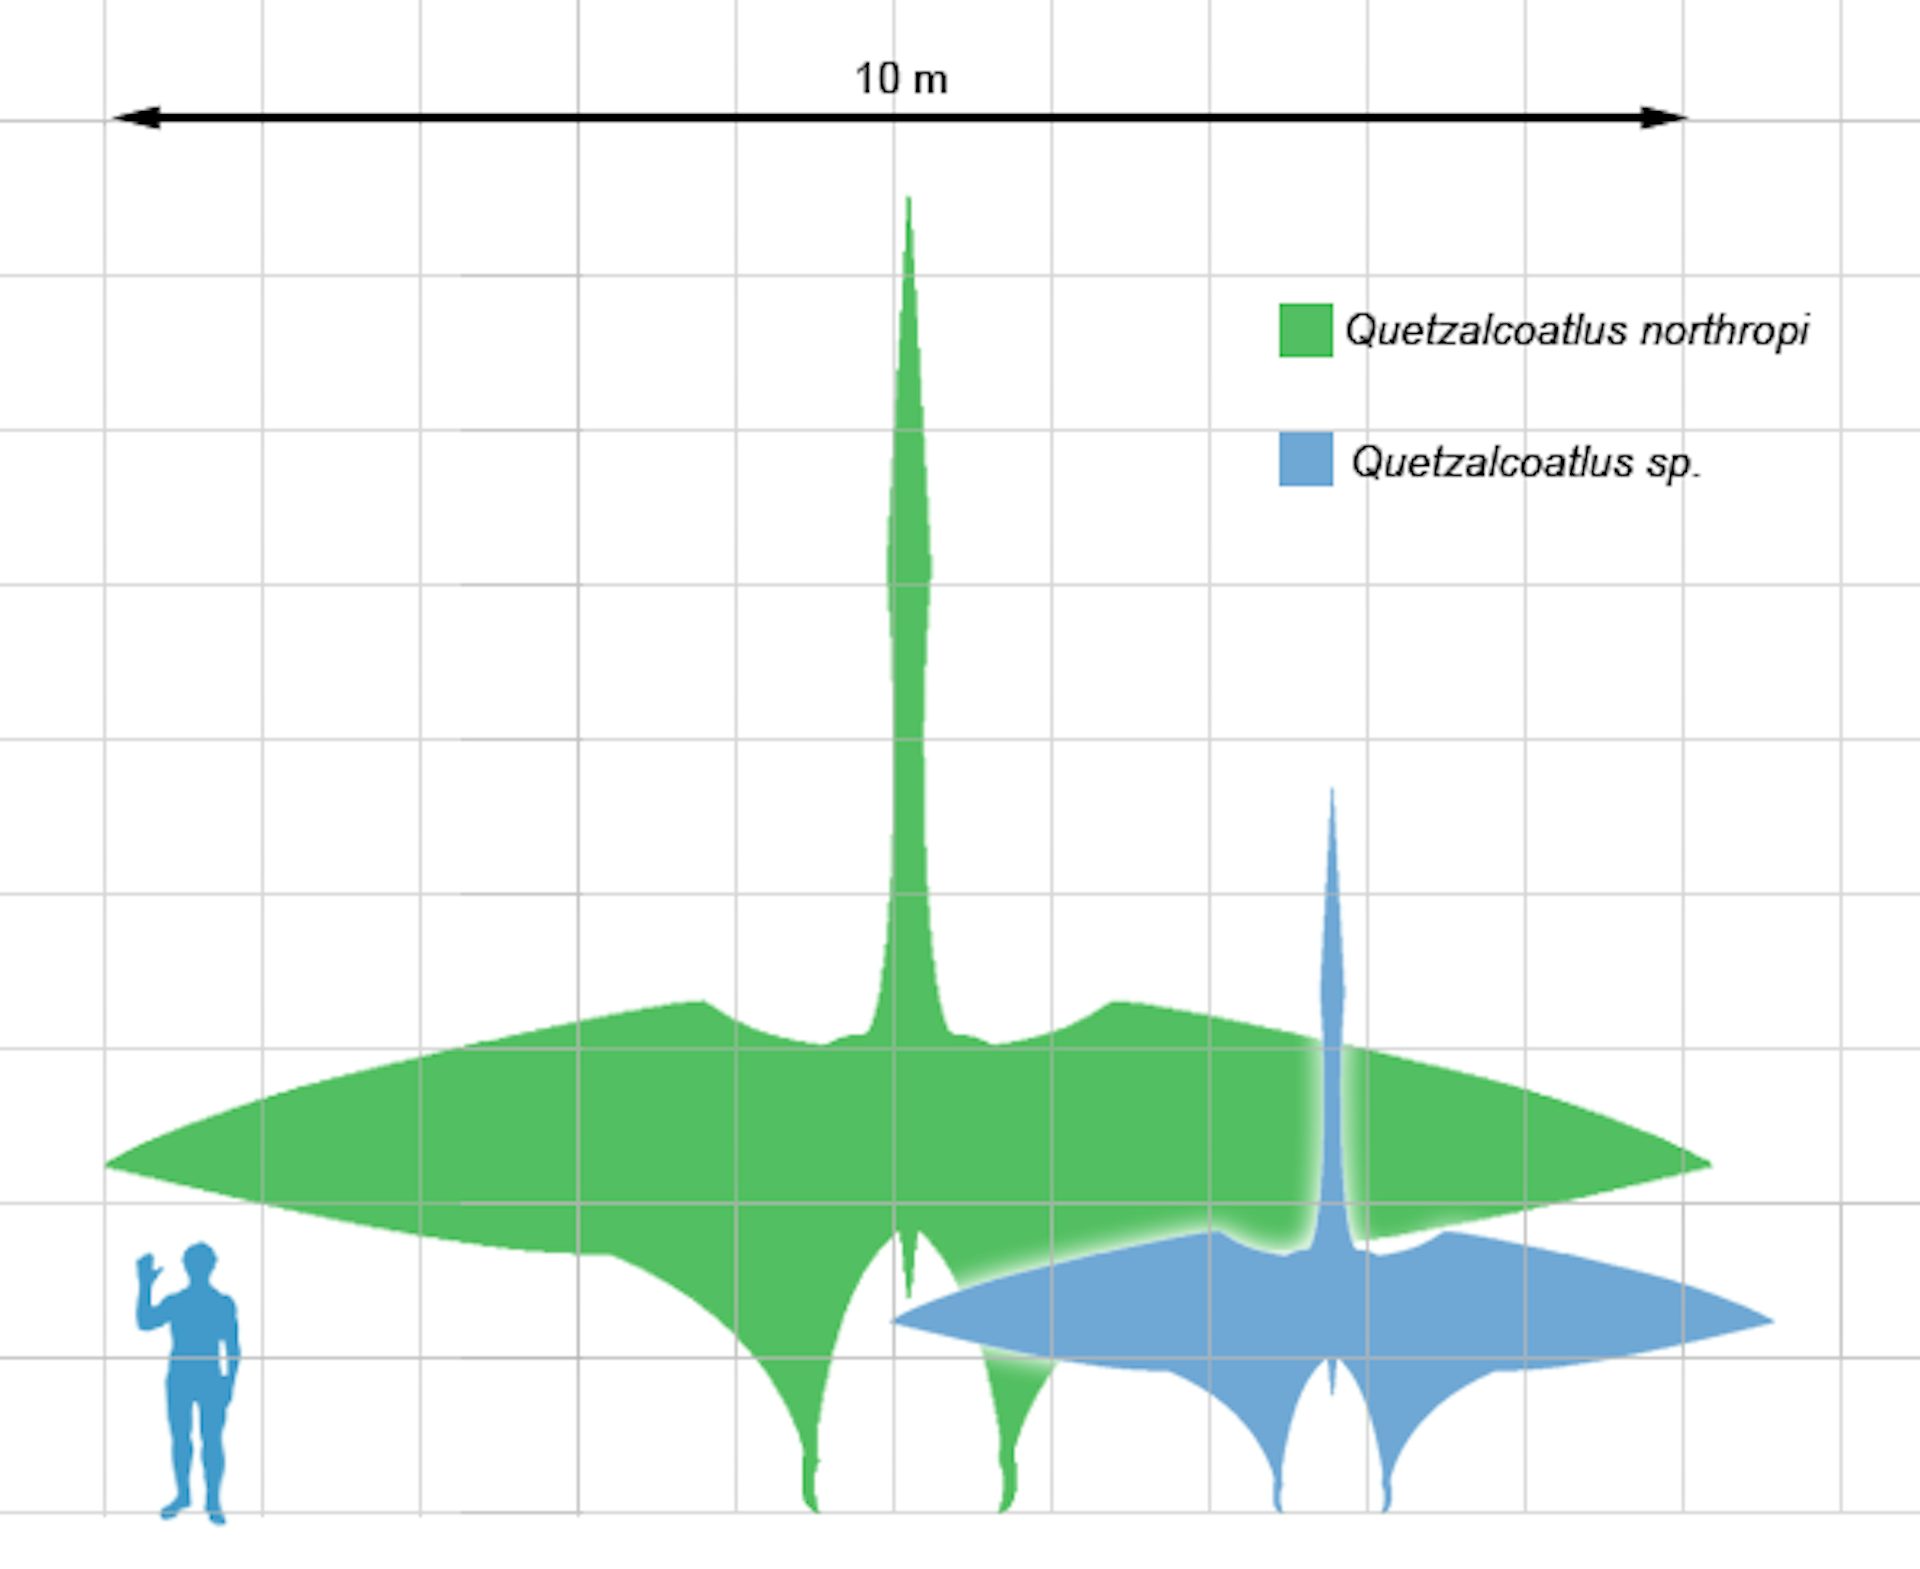 Quetzalcoatlus Northropi and Quetzalcoatlus Sp. w/Human for Scale